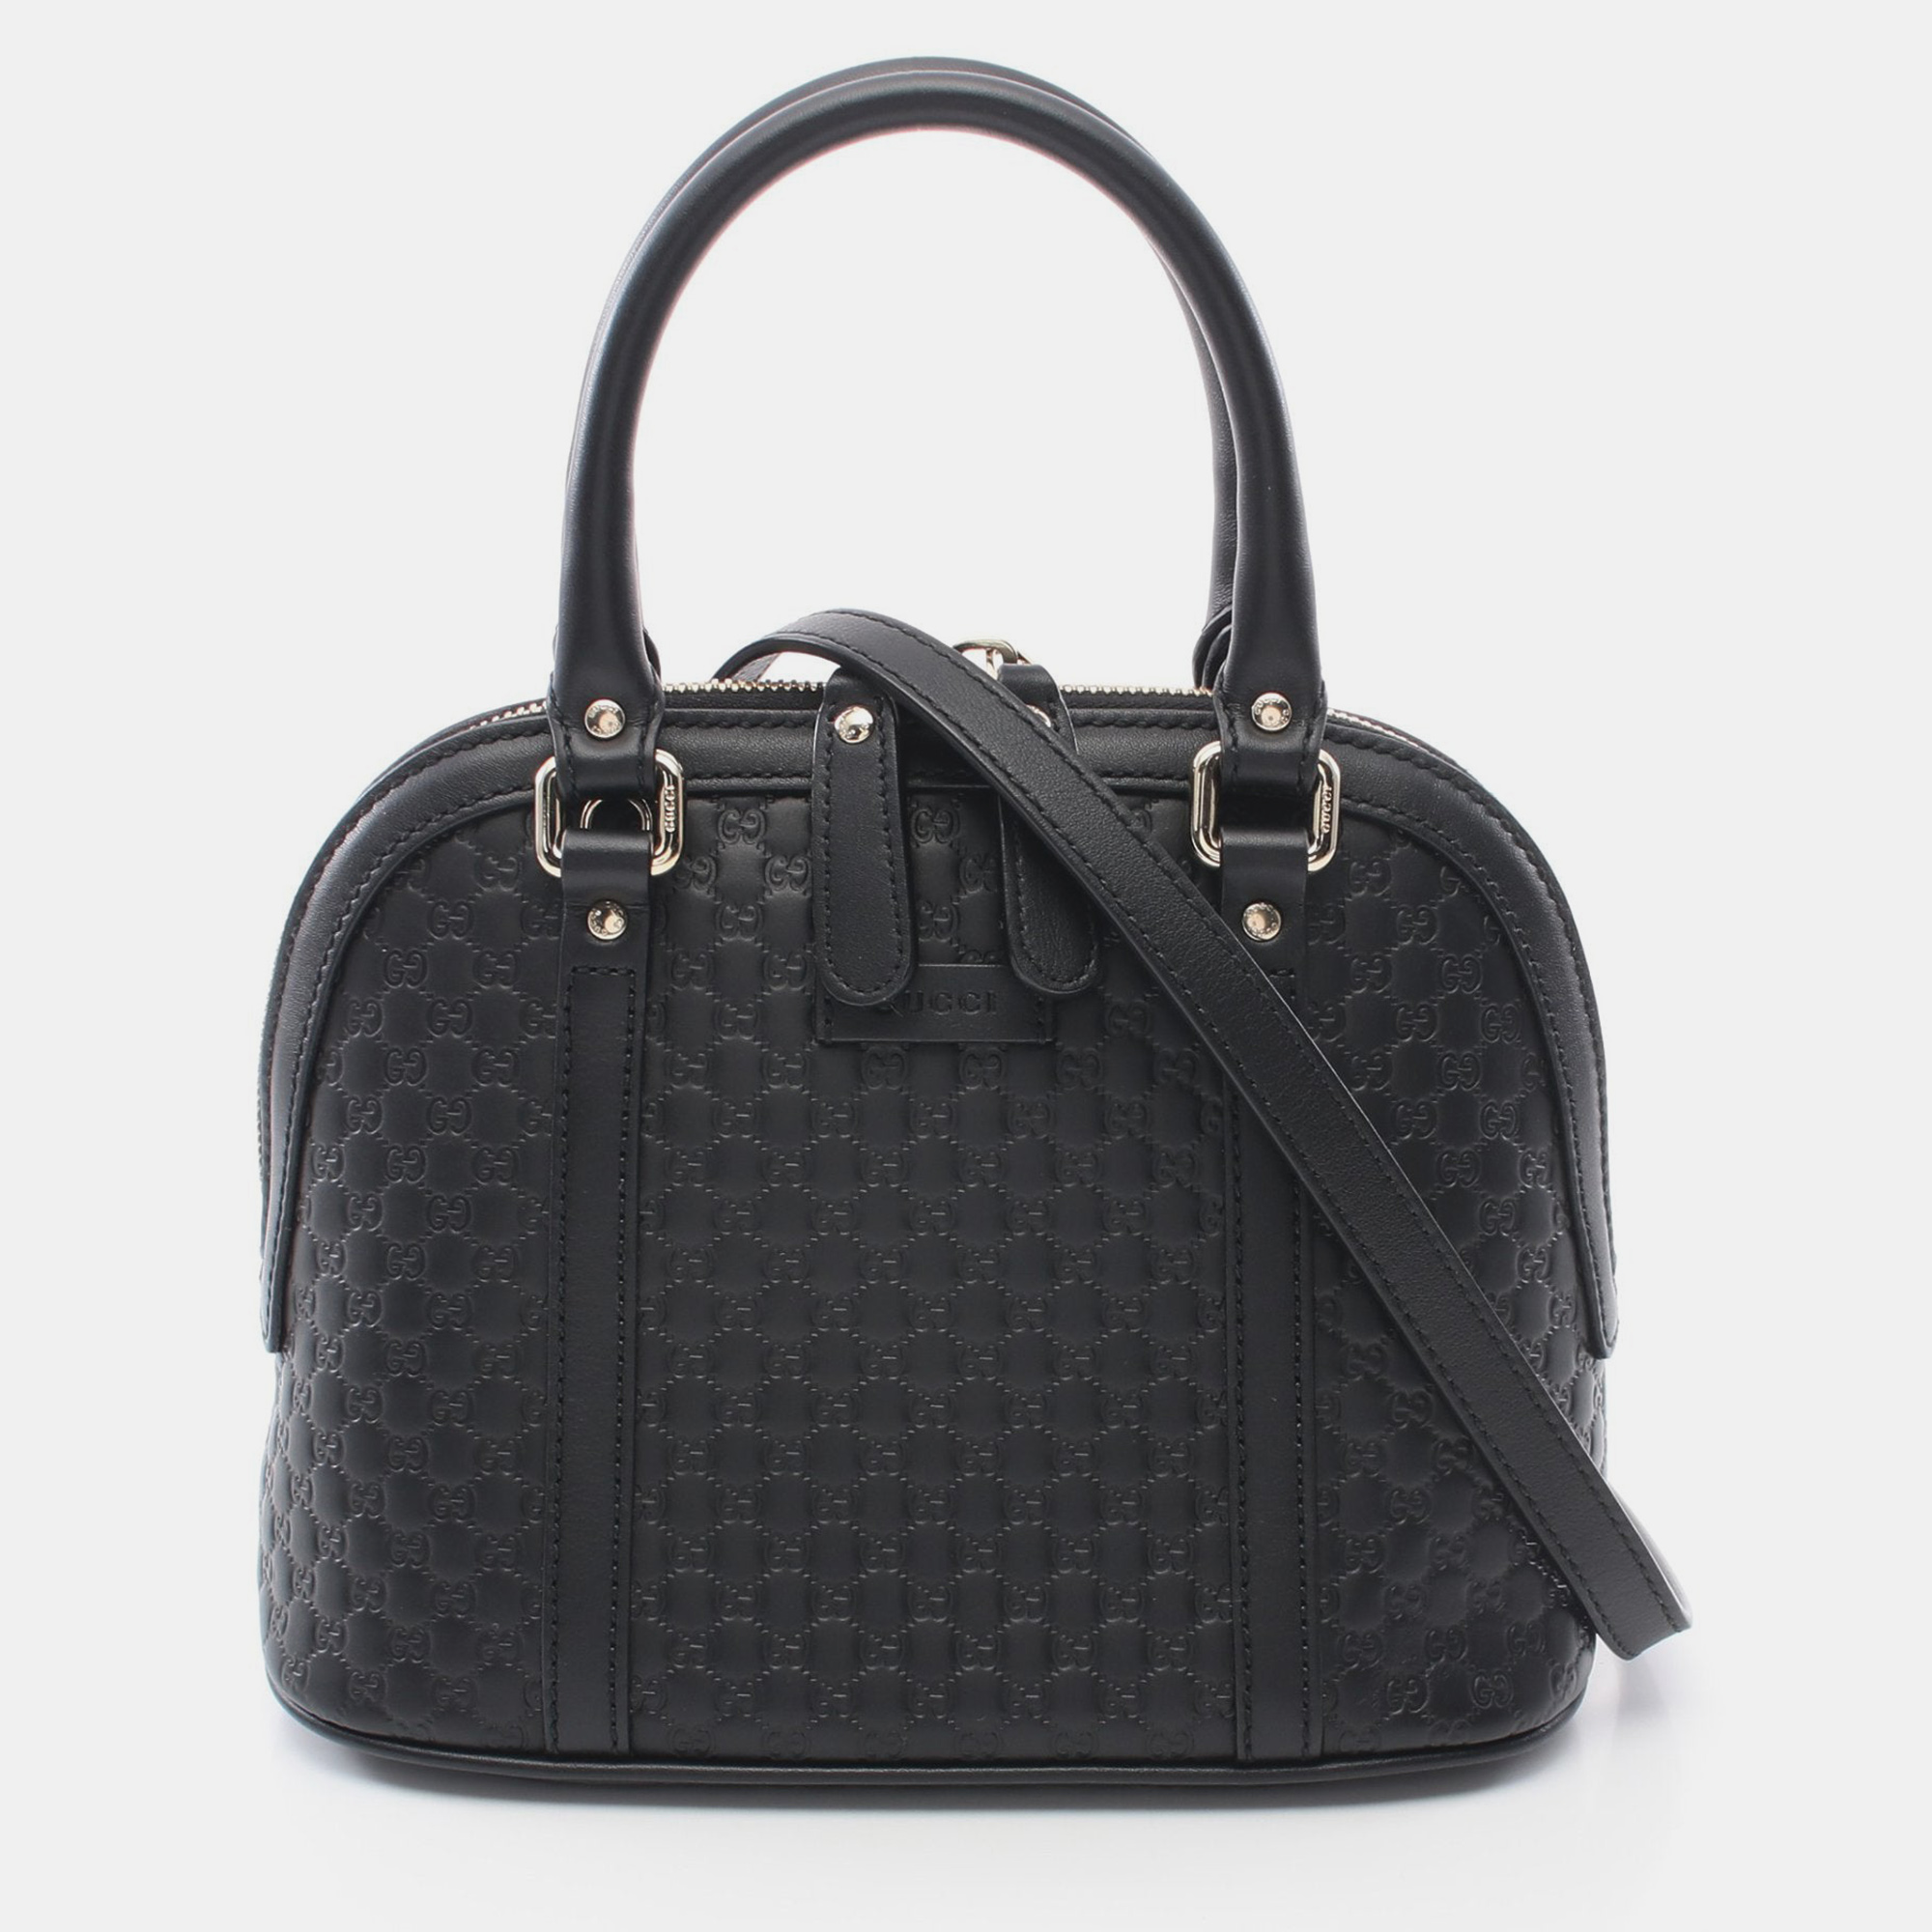 Gucci micro gucci sima handbag leather black 2way